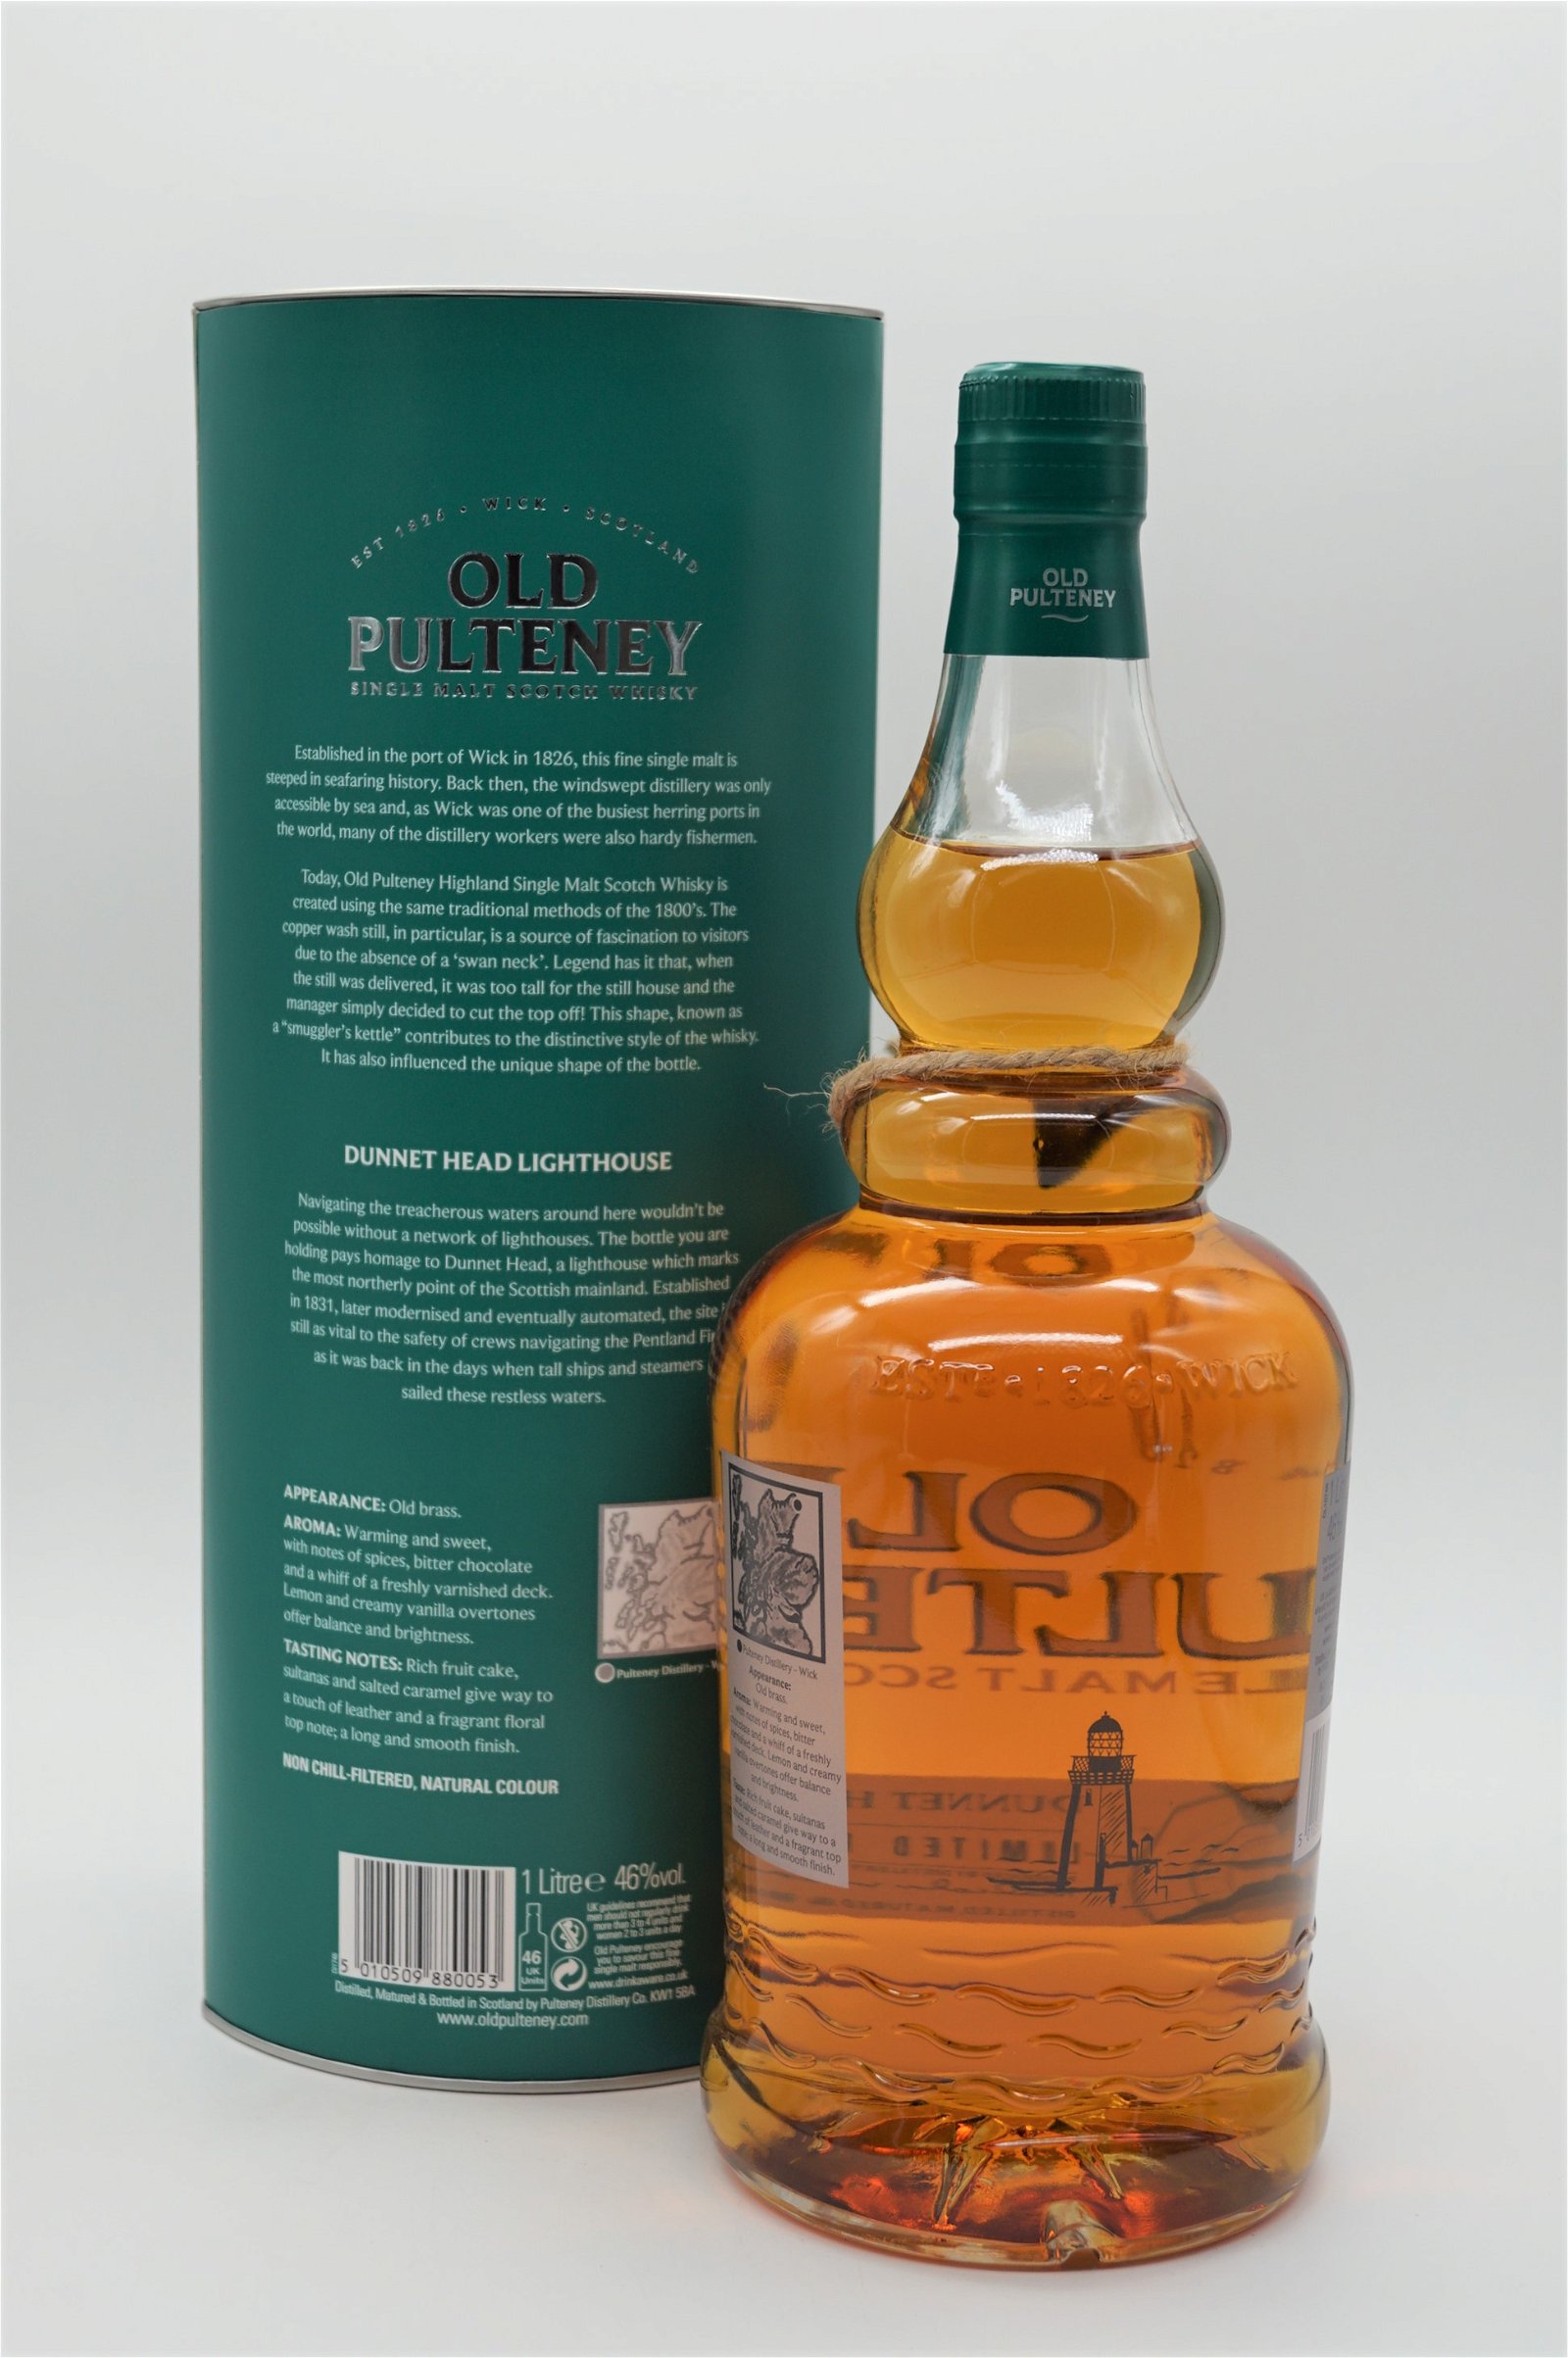 Old Pulteney Dunnet Head Limited Release Single Malt Scotch Whisky